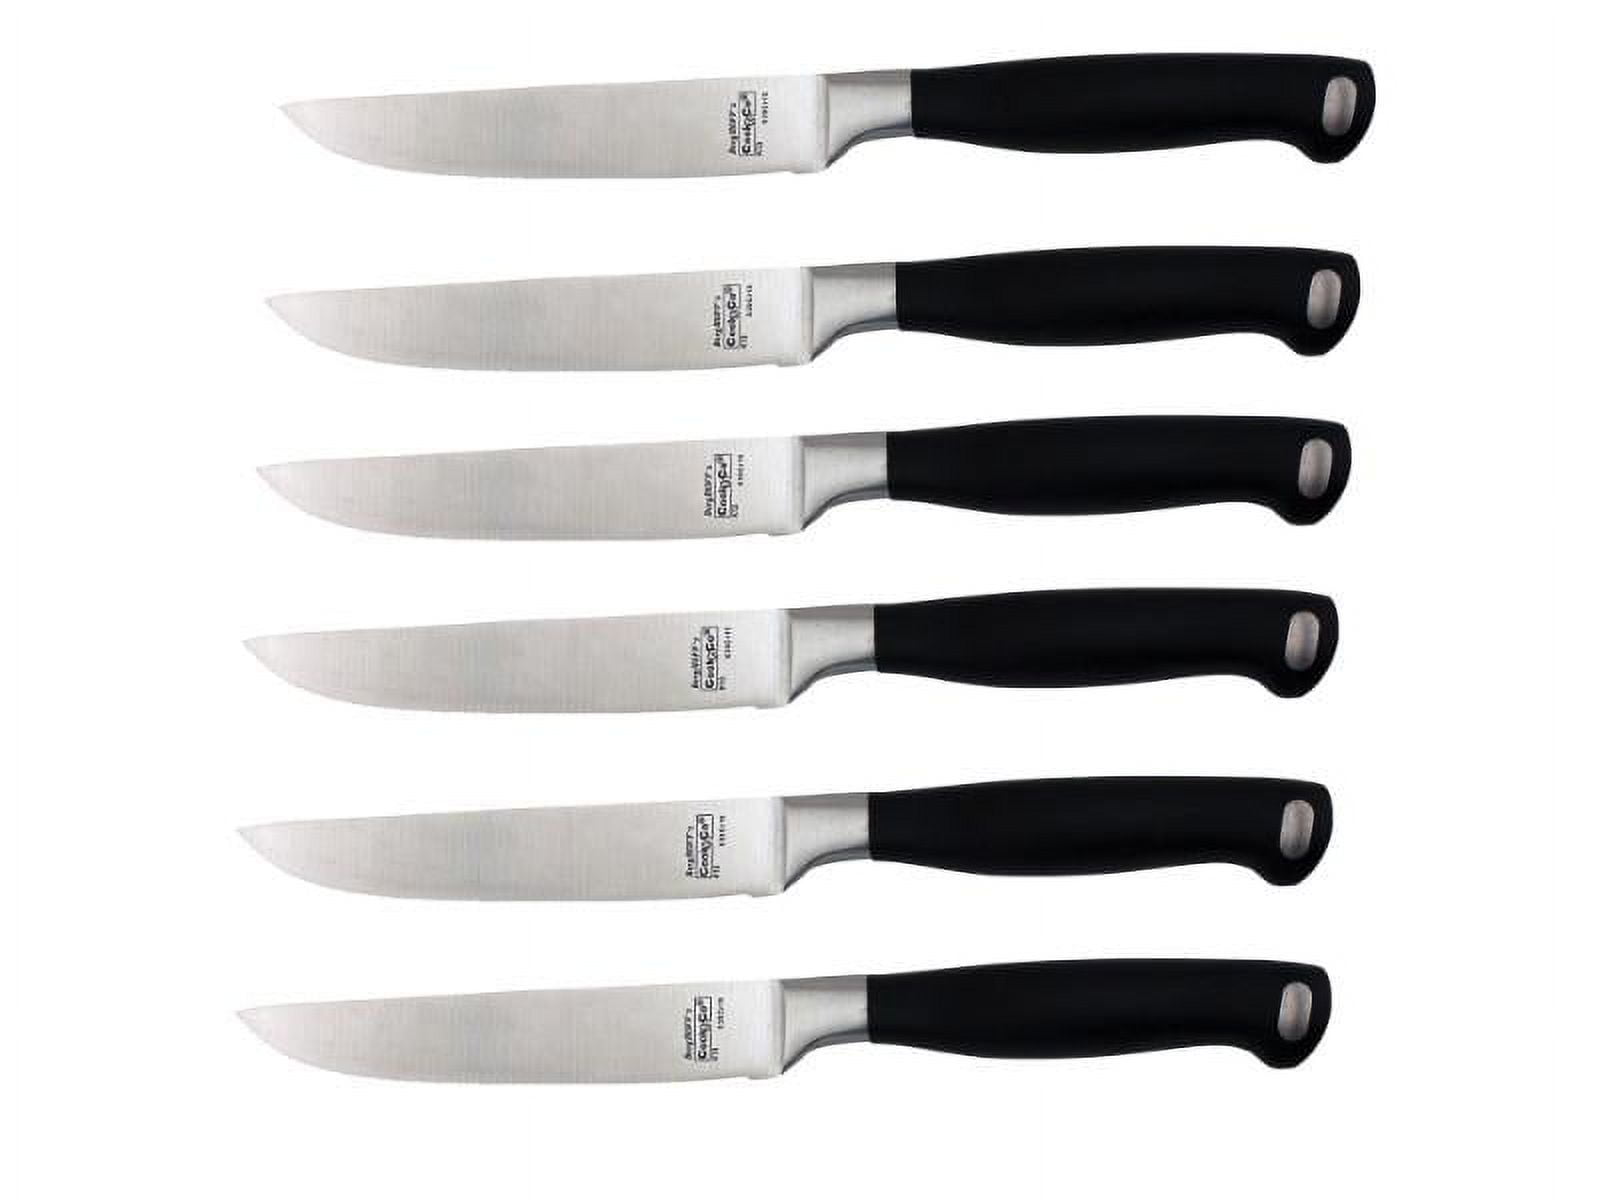 BergHOFF Essentials Stainless Steel Gourmet Utility Knife, 6 in